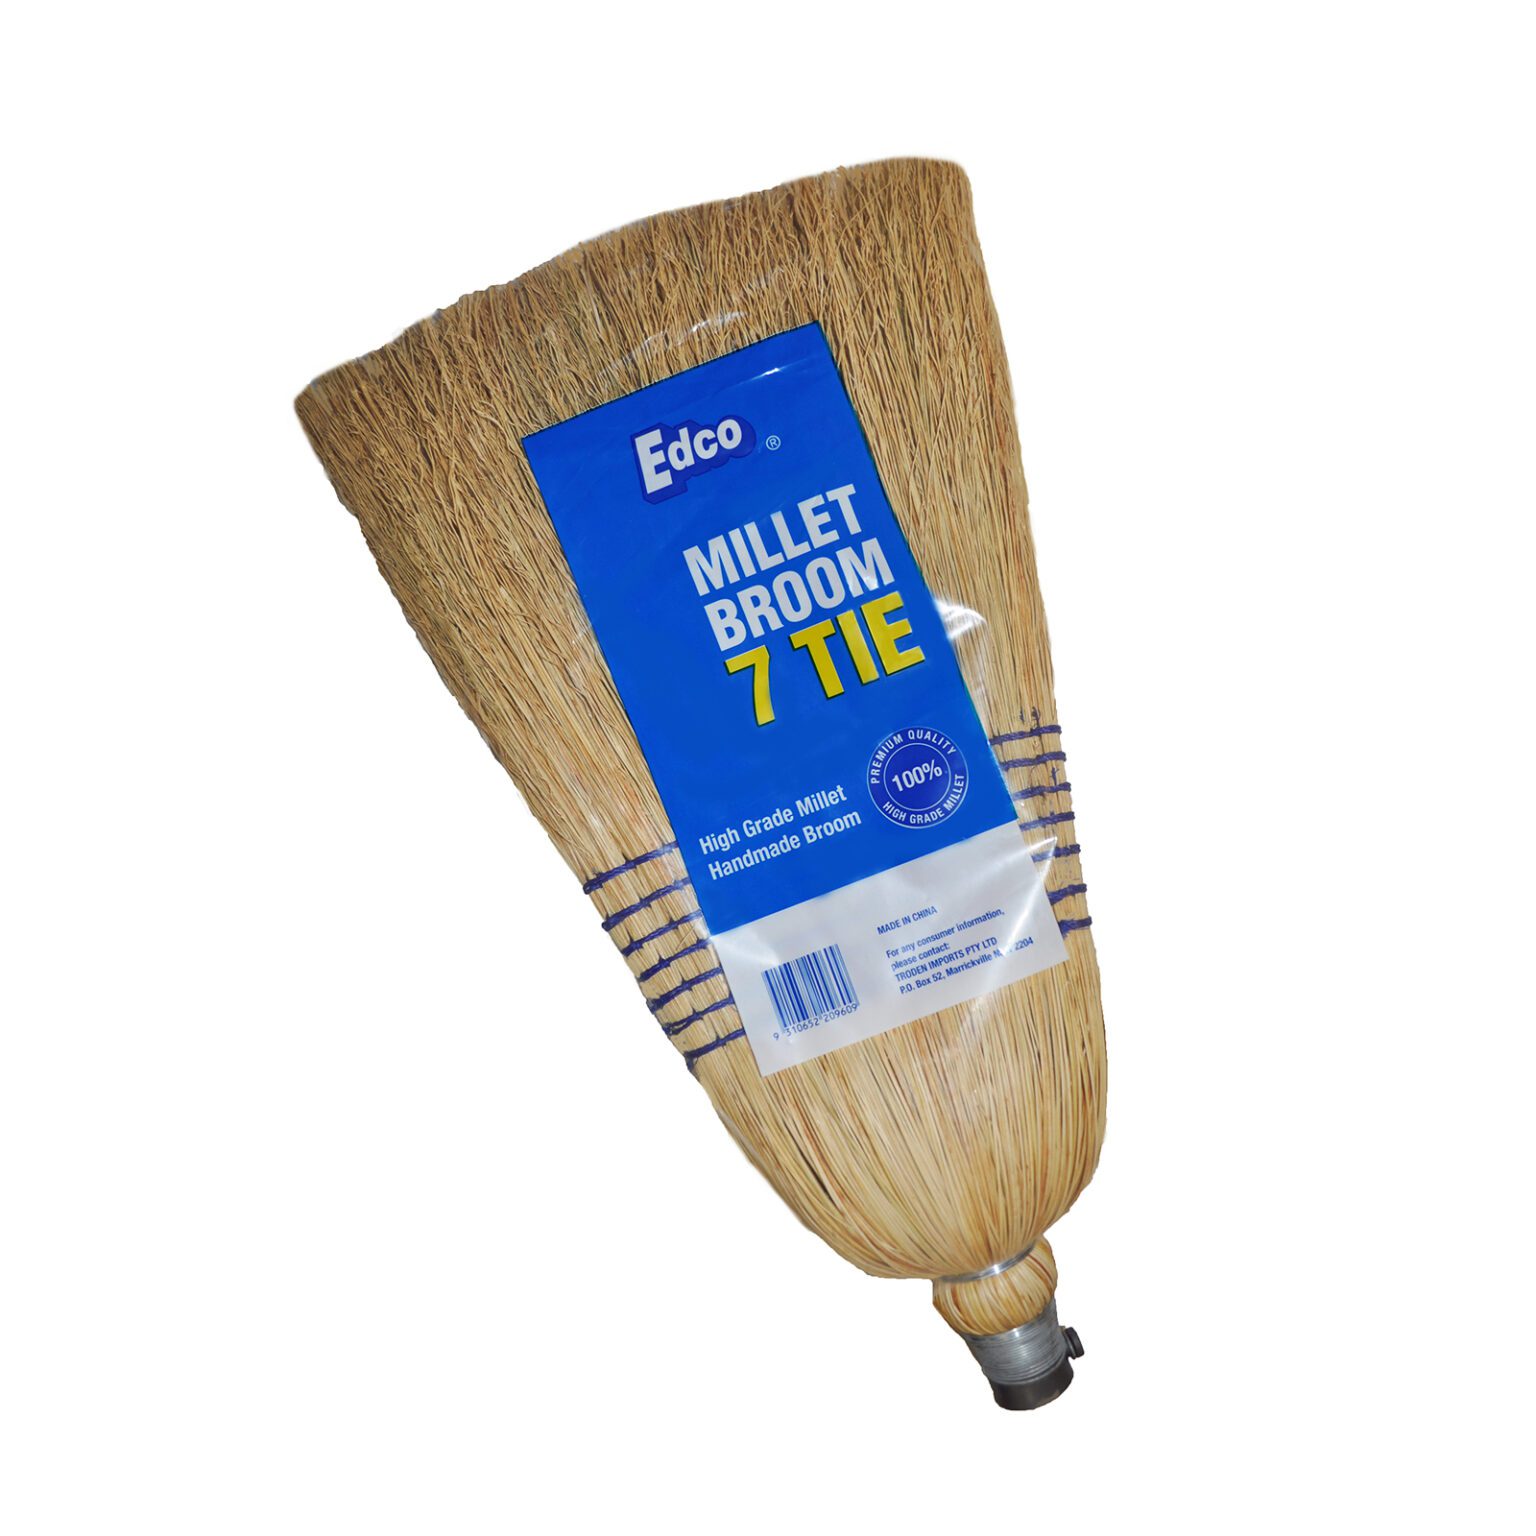 10190-Edco-7-Tie-Millet-Broom-With-Handle